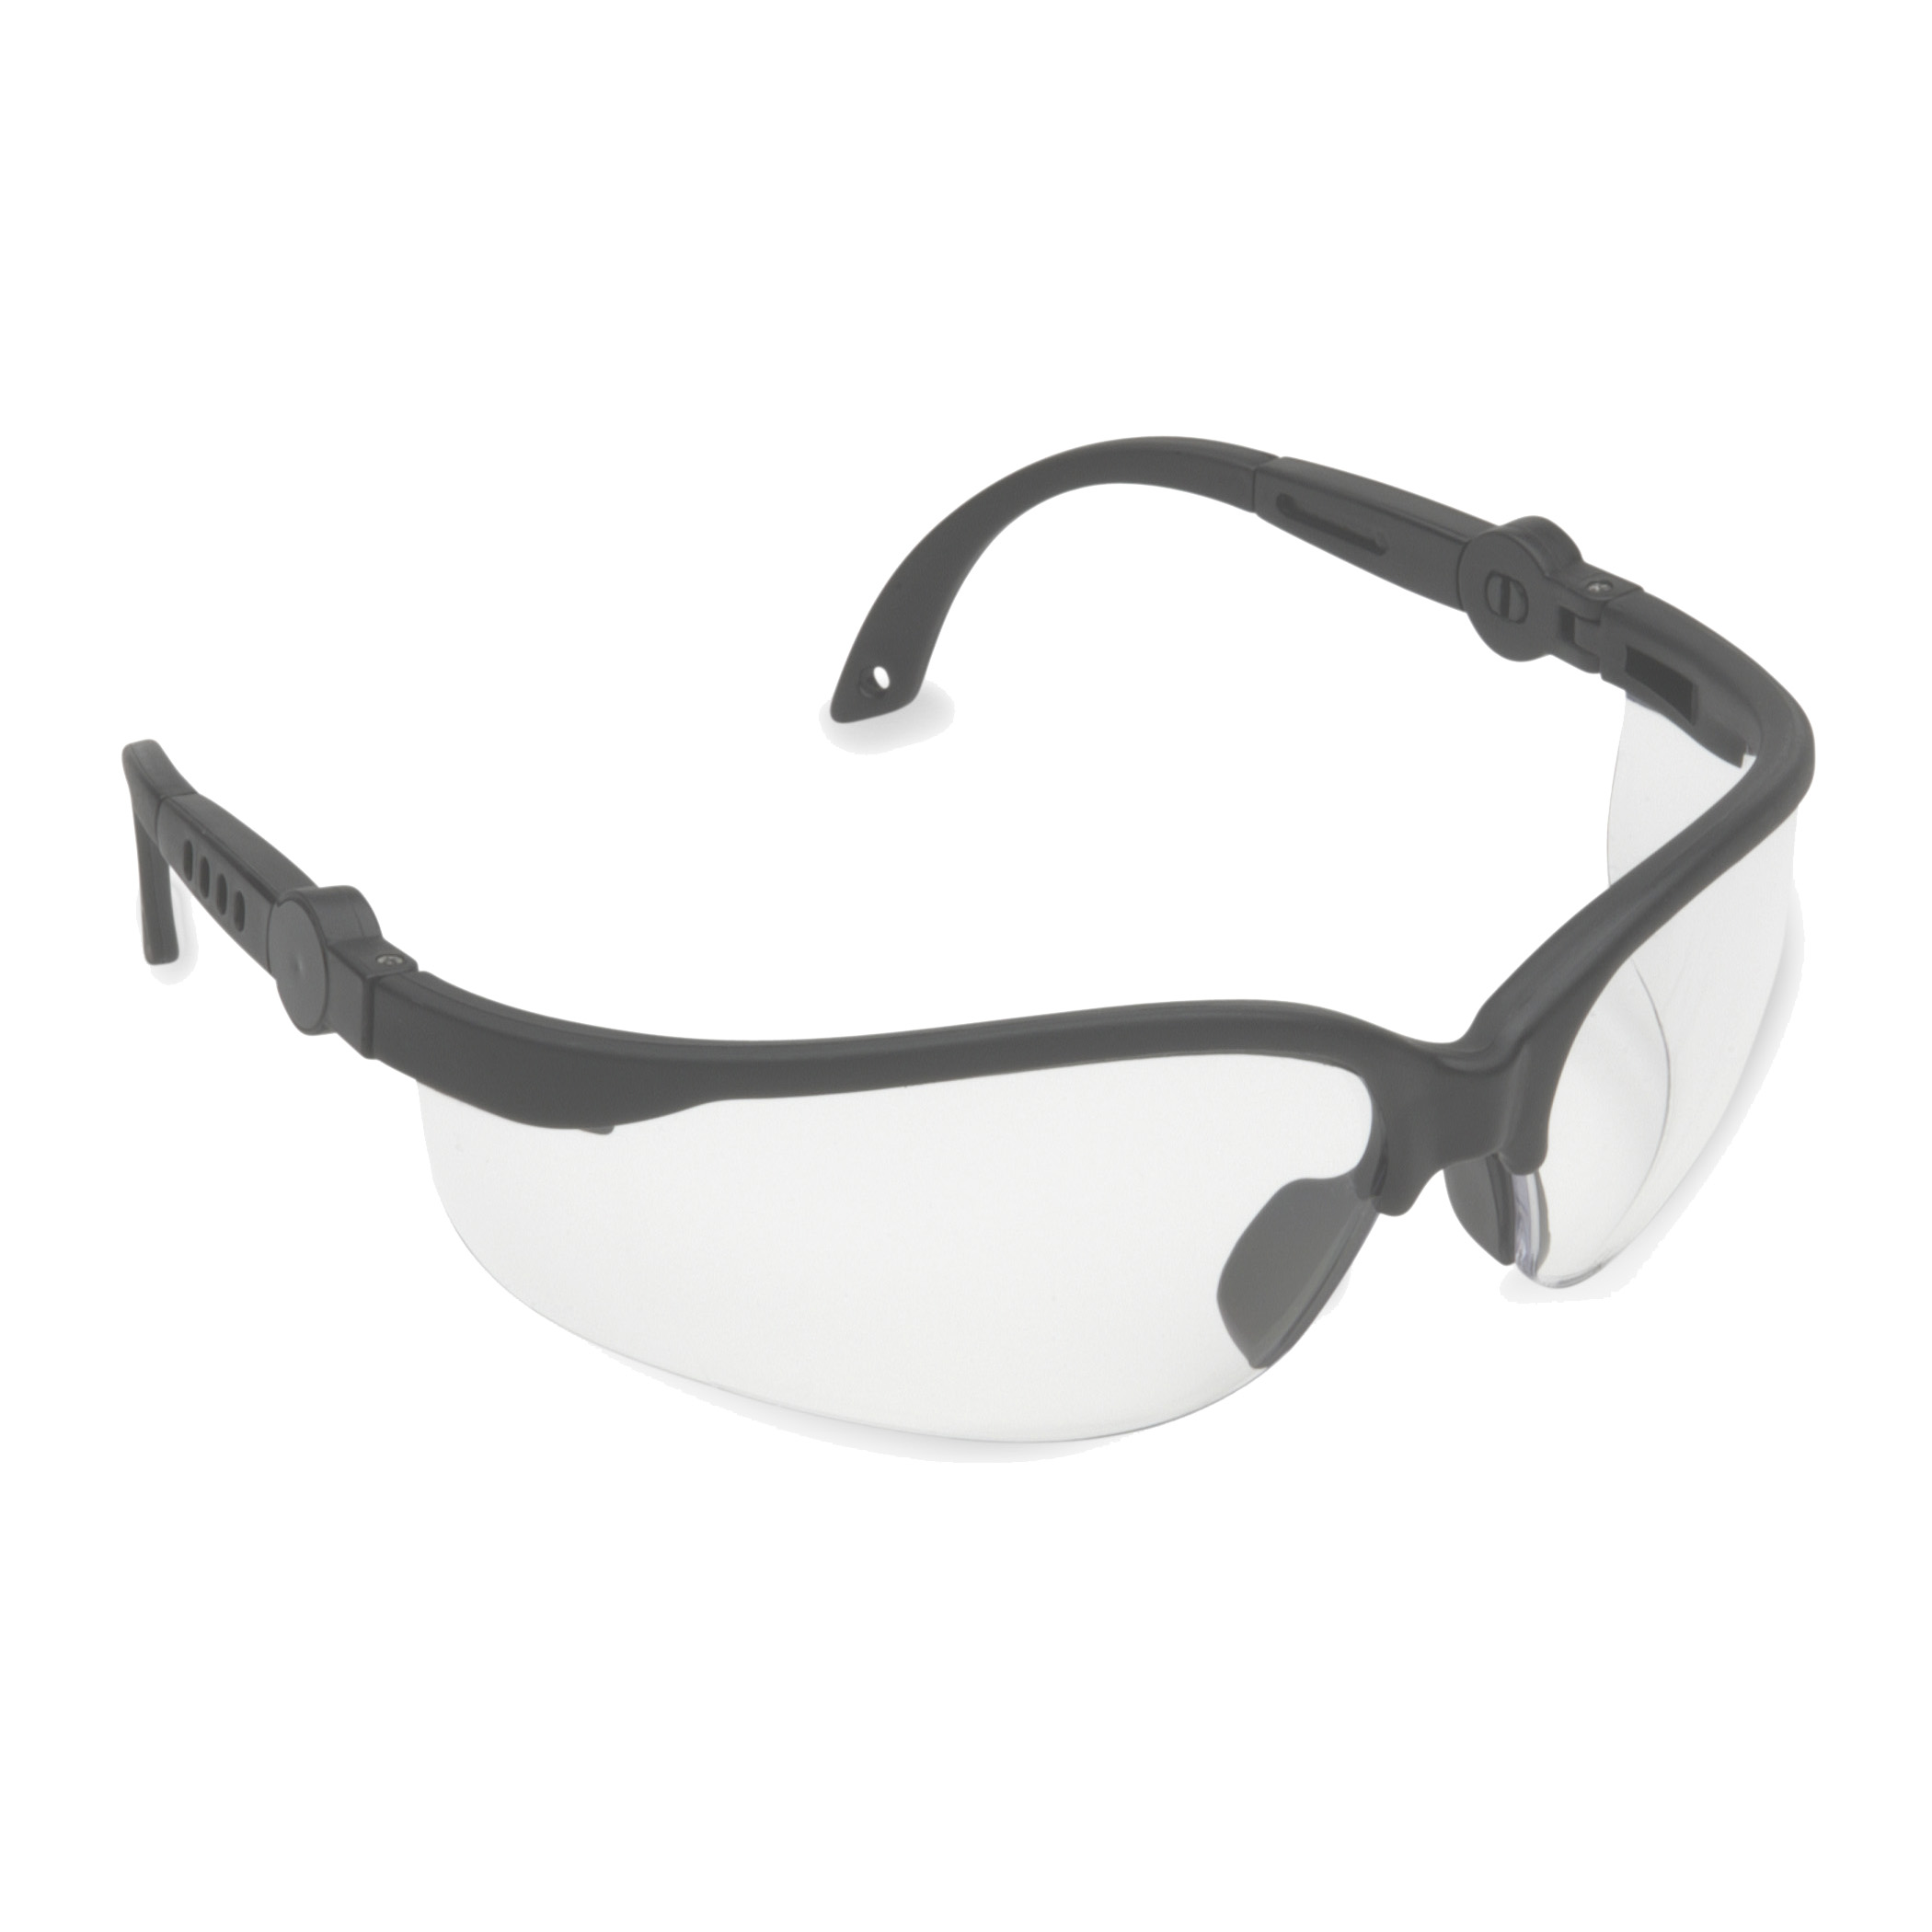 EFB10S Akita safety glasses black frame clear lens